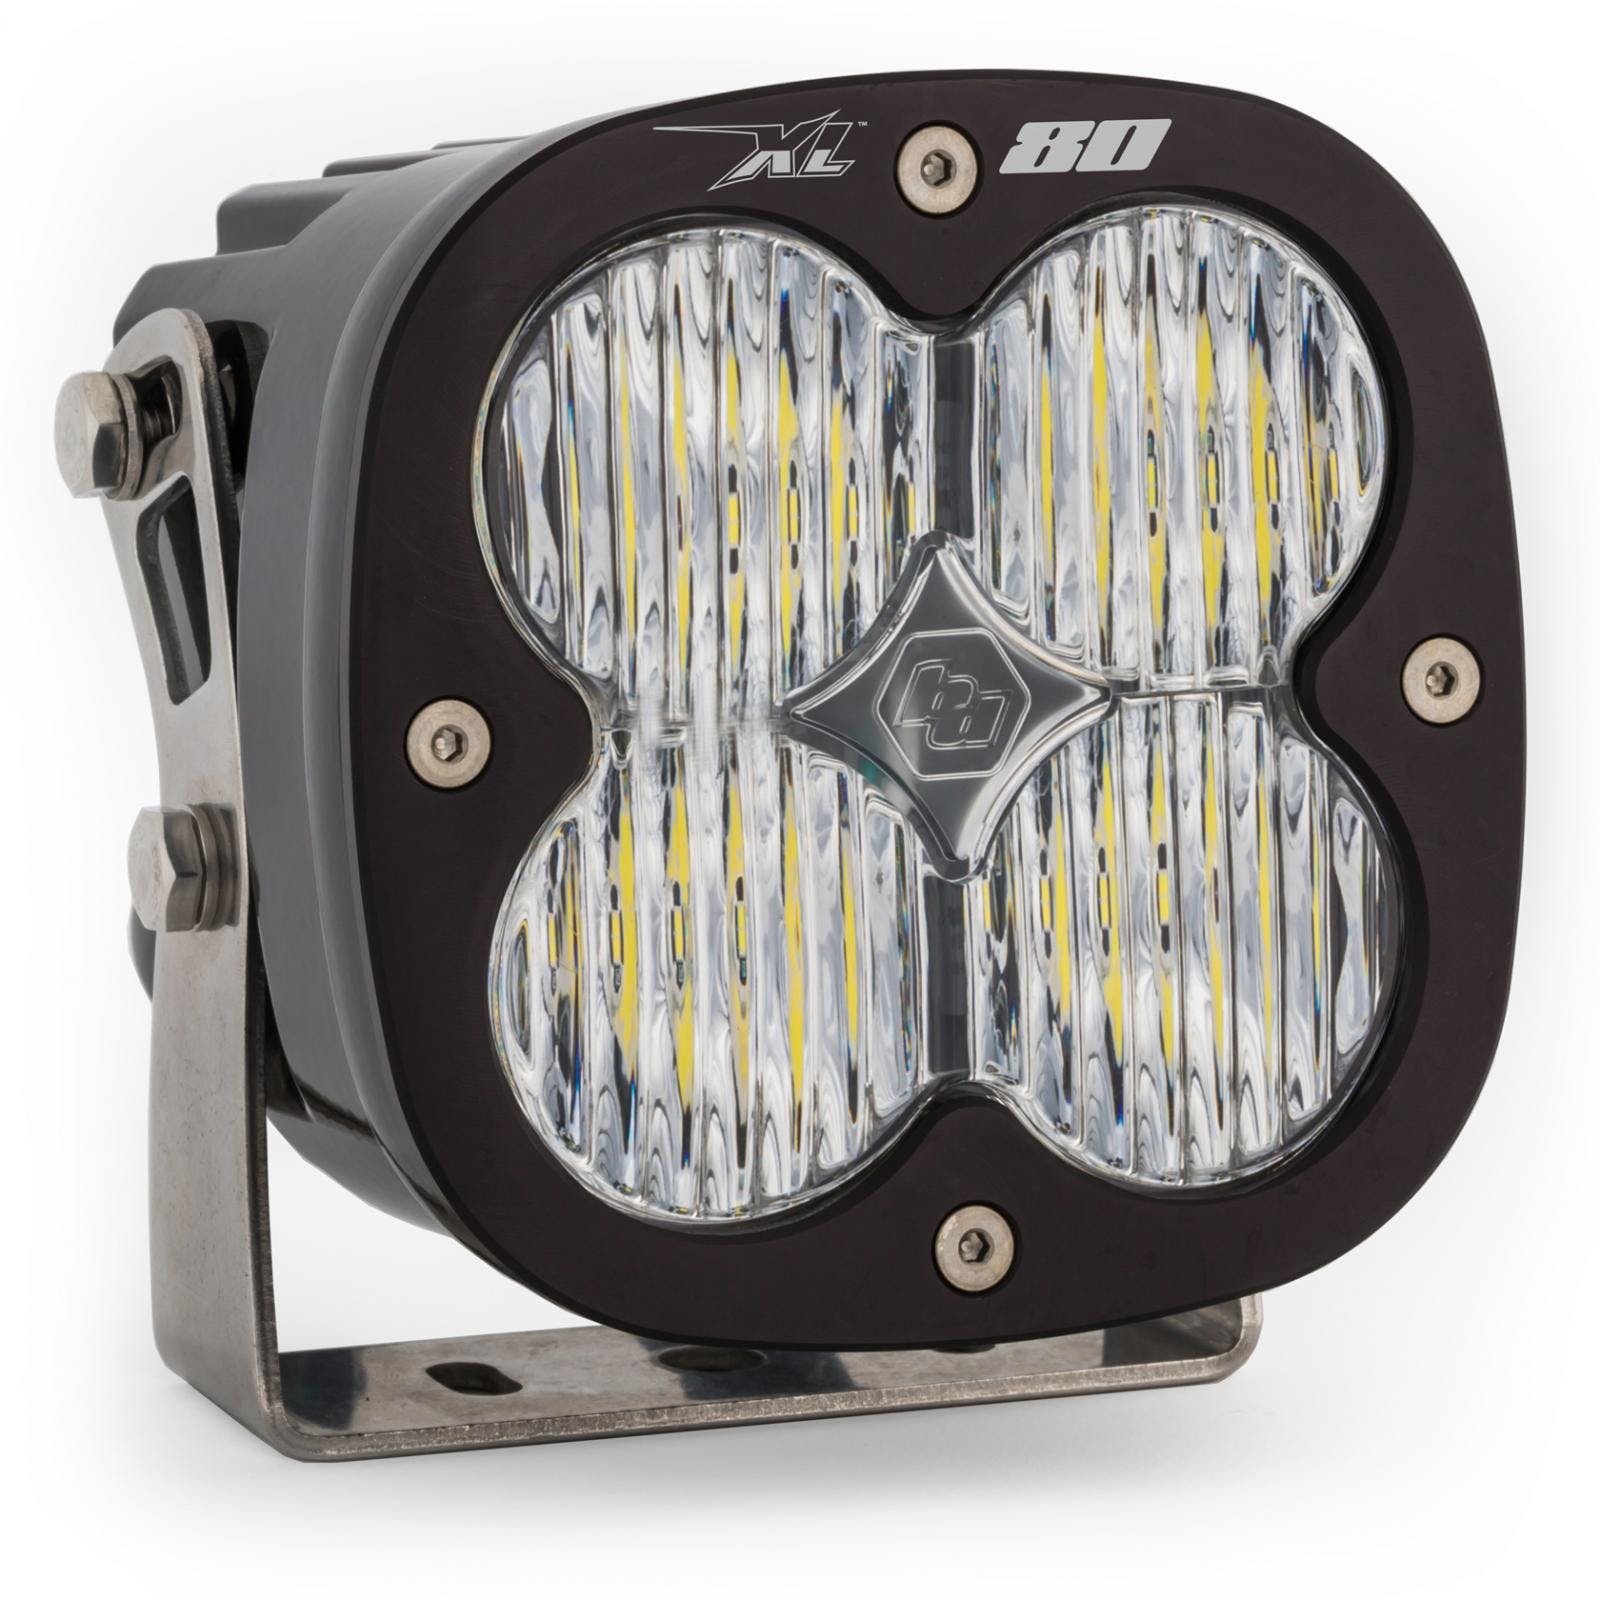 Baja Designs 670005 LED Light Pods Clear Lens Spot Each XL80 Wide Cornering